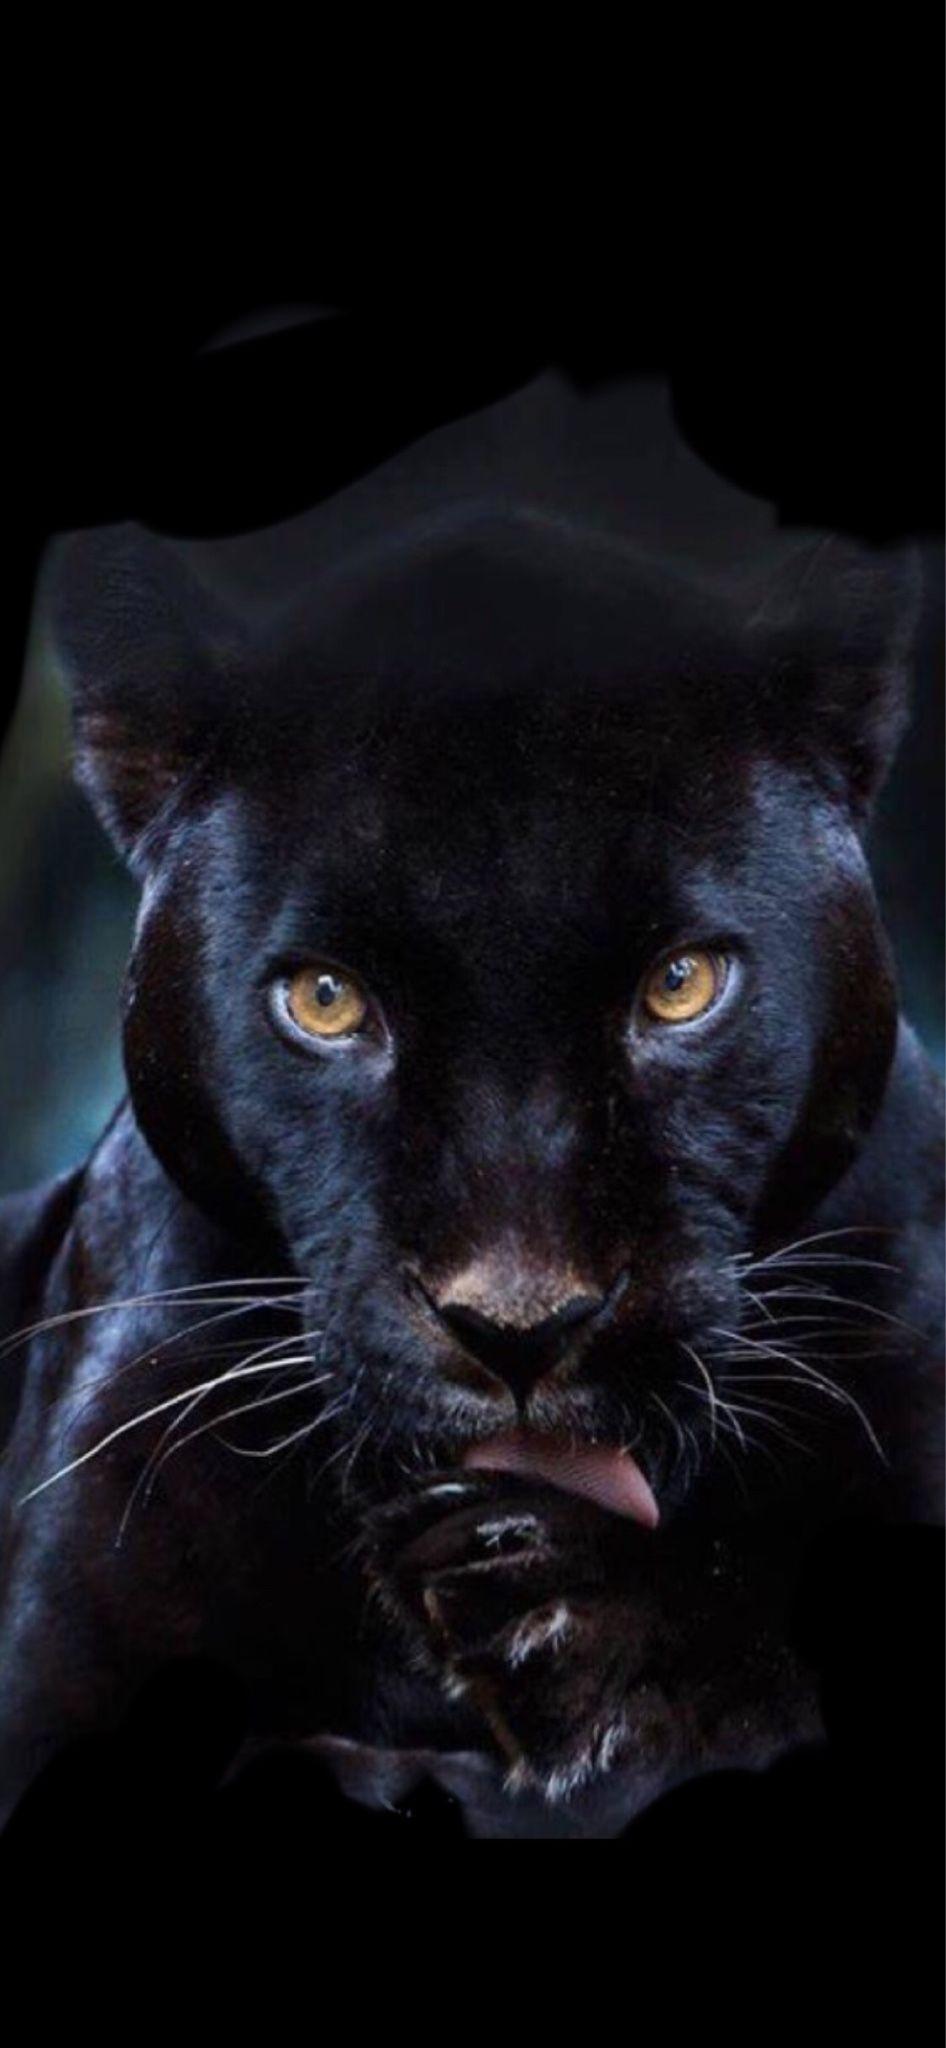  Black  Panther  Face Wallpapers  Top Free Black  Panther  